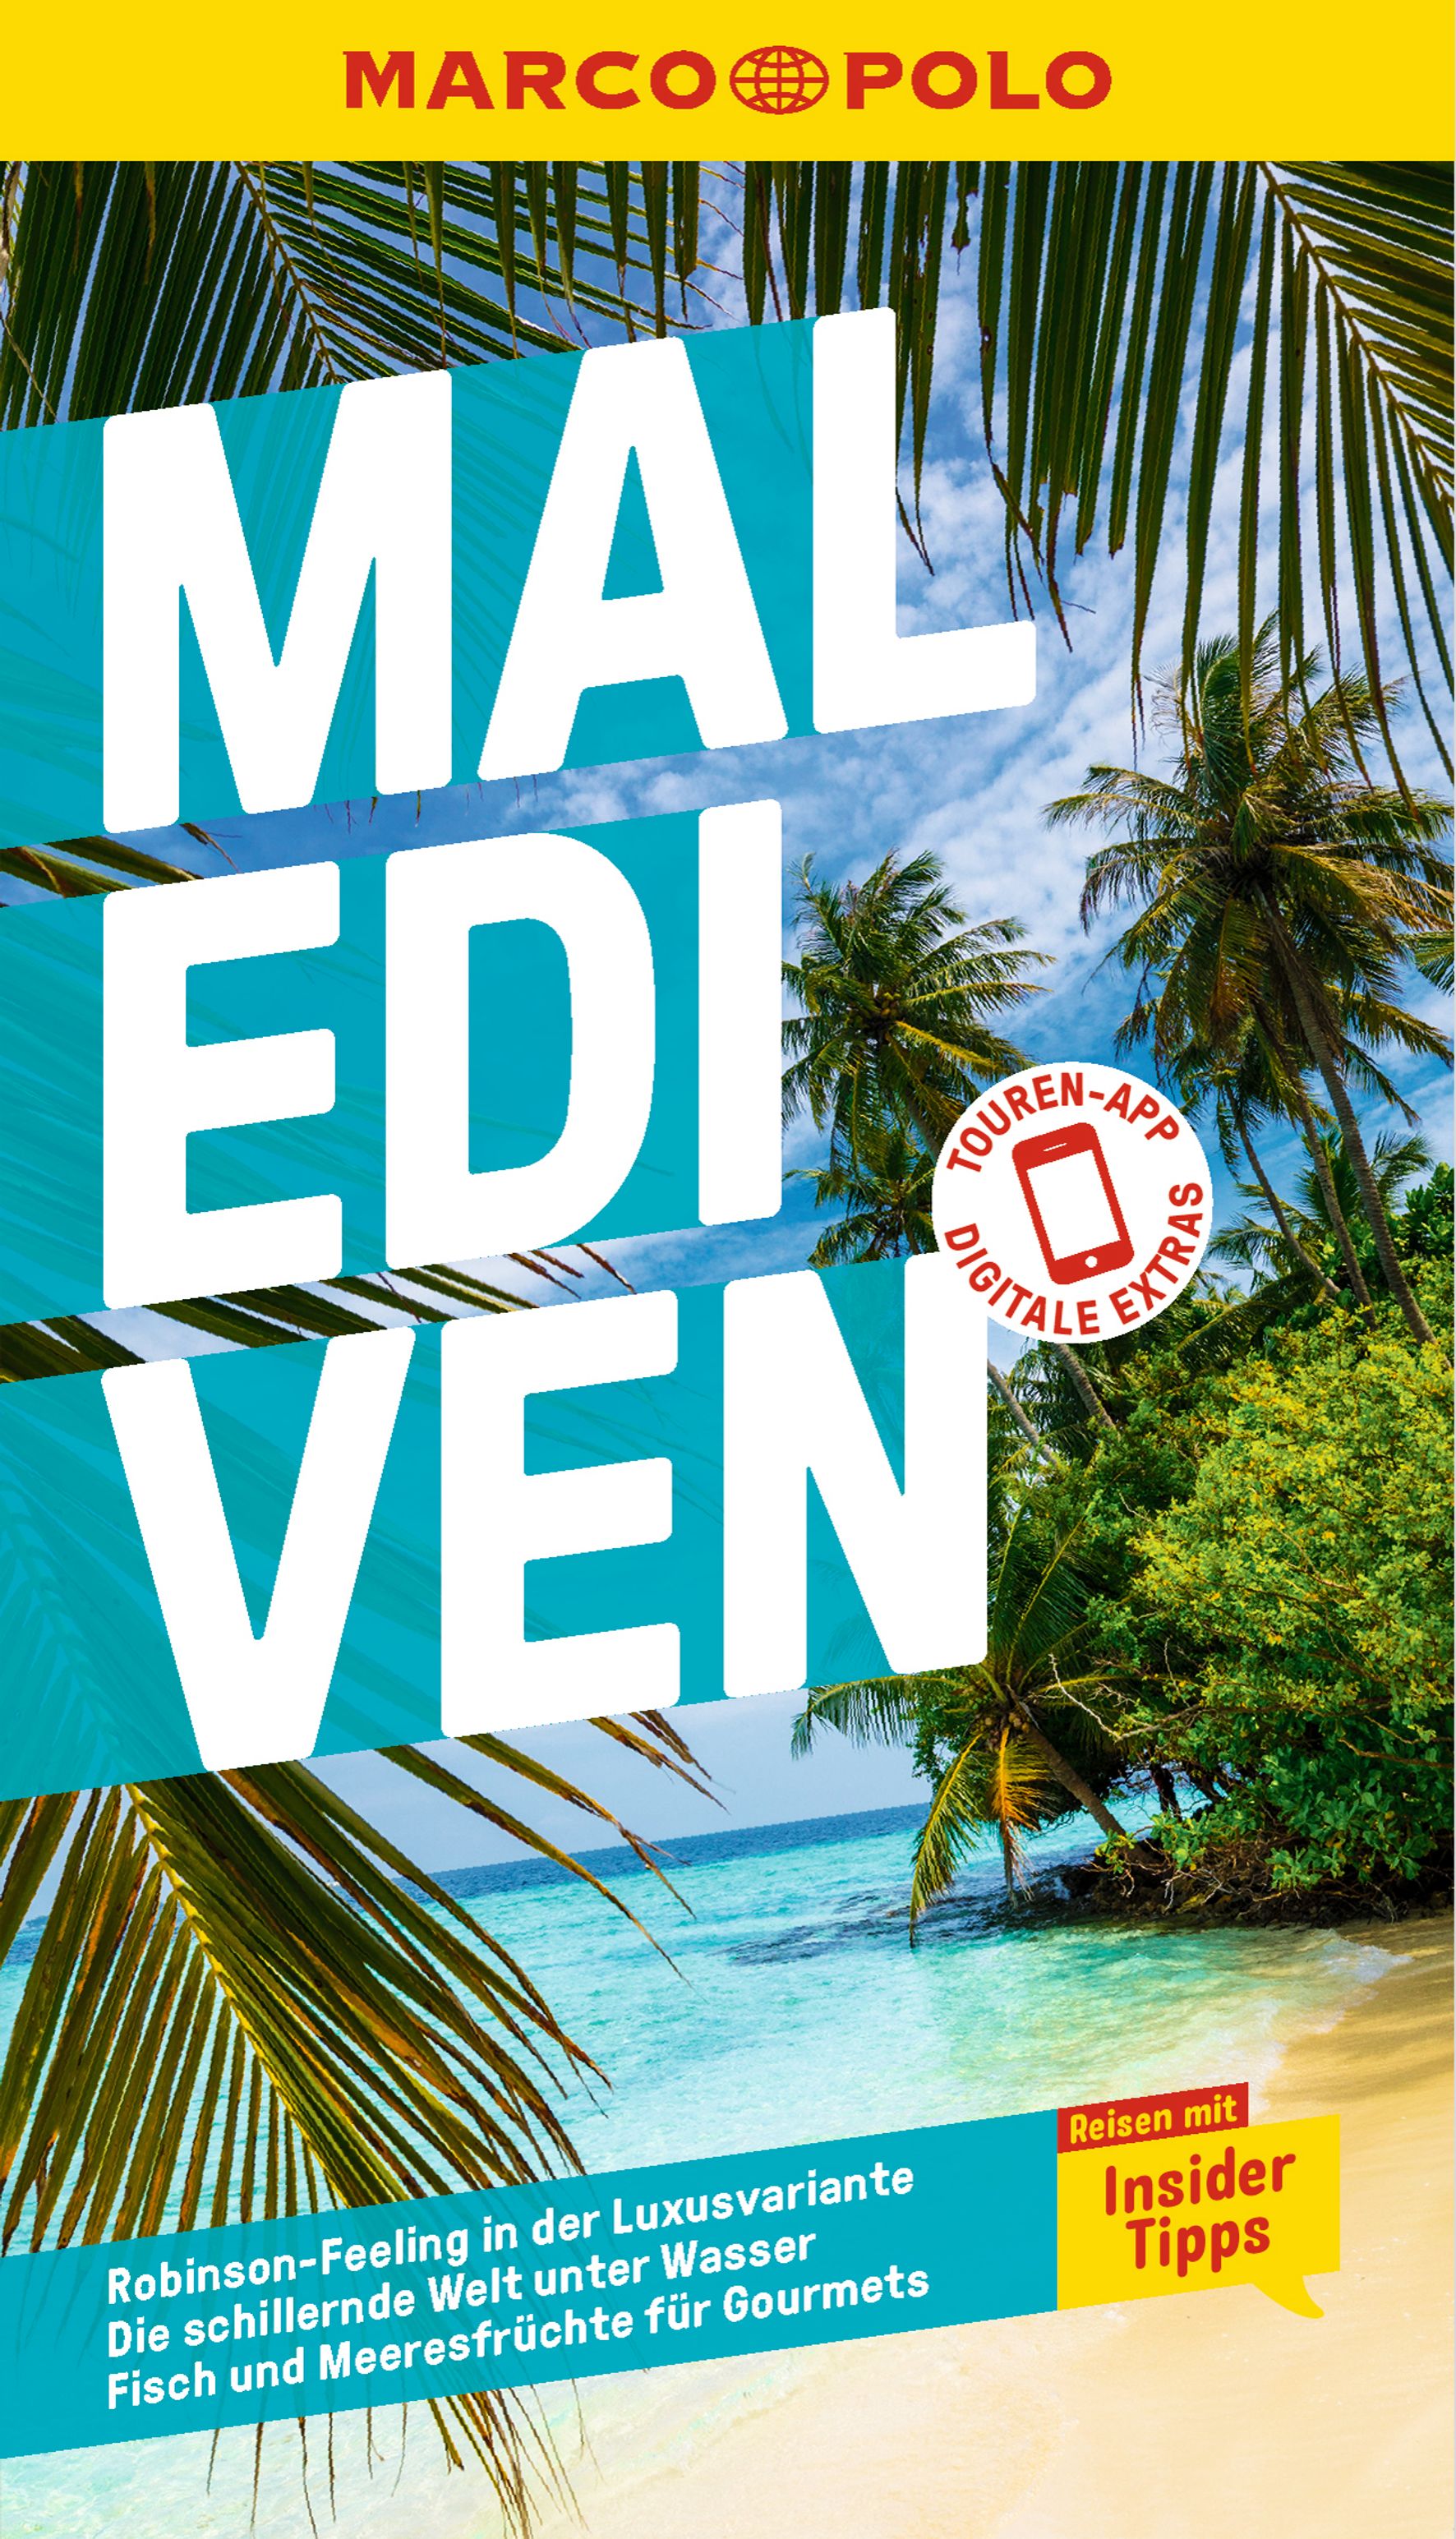 MAIRDUMONT Malediven (eBook)